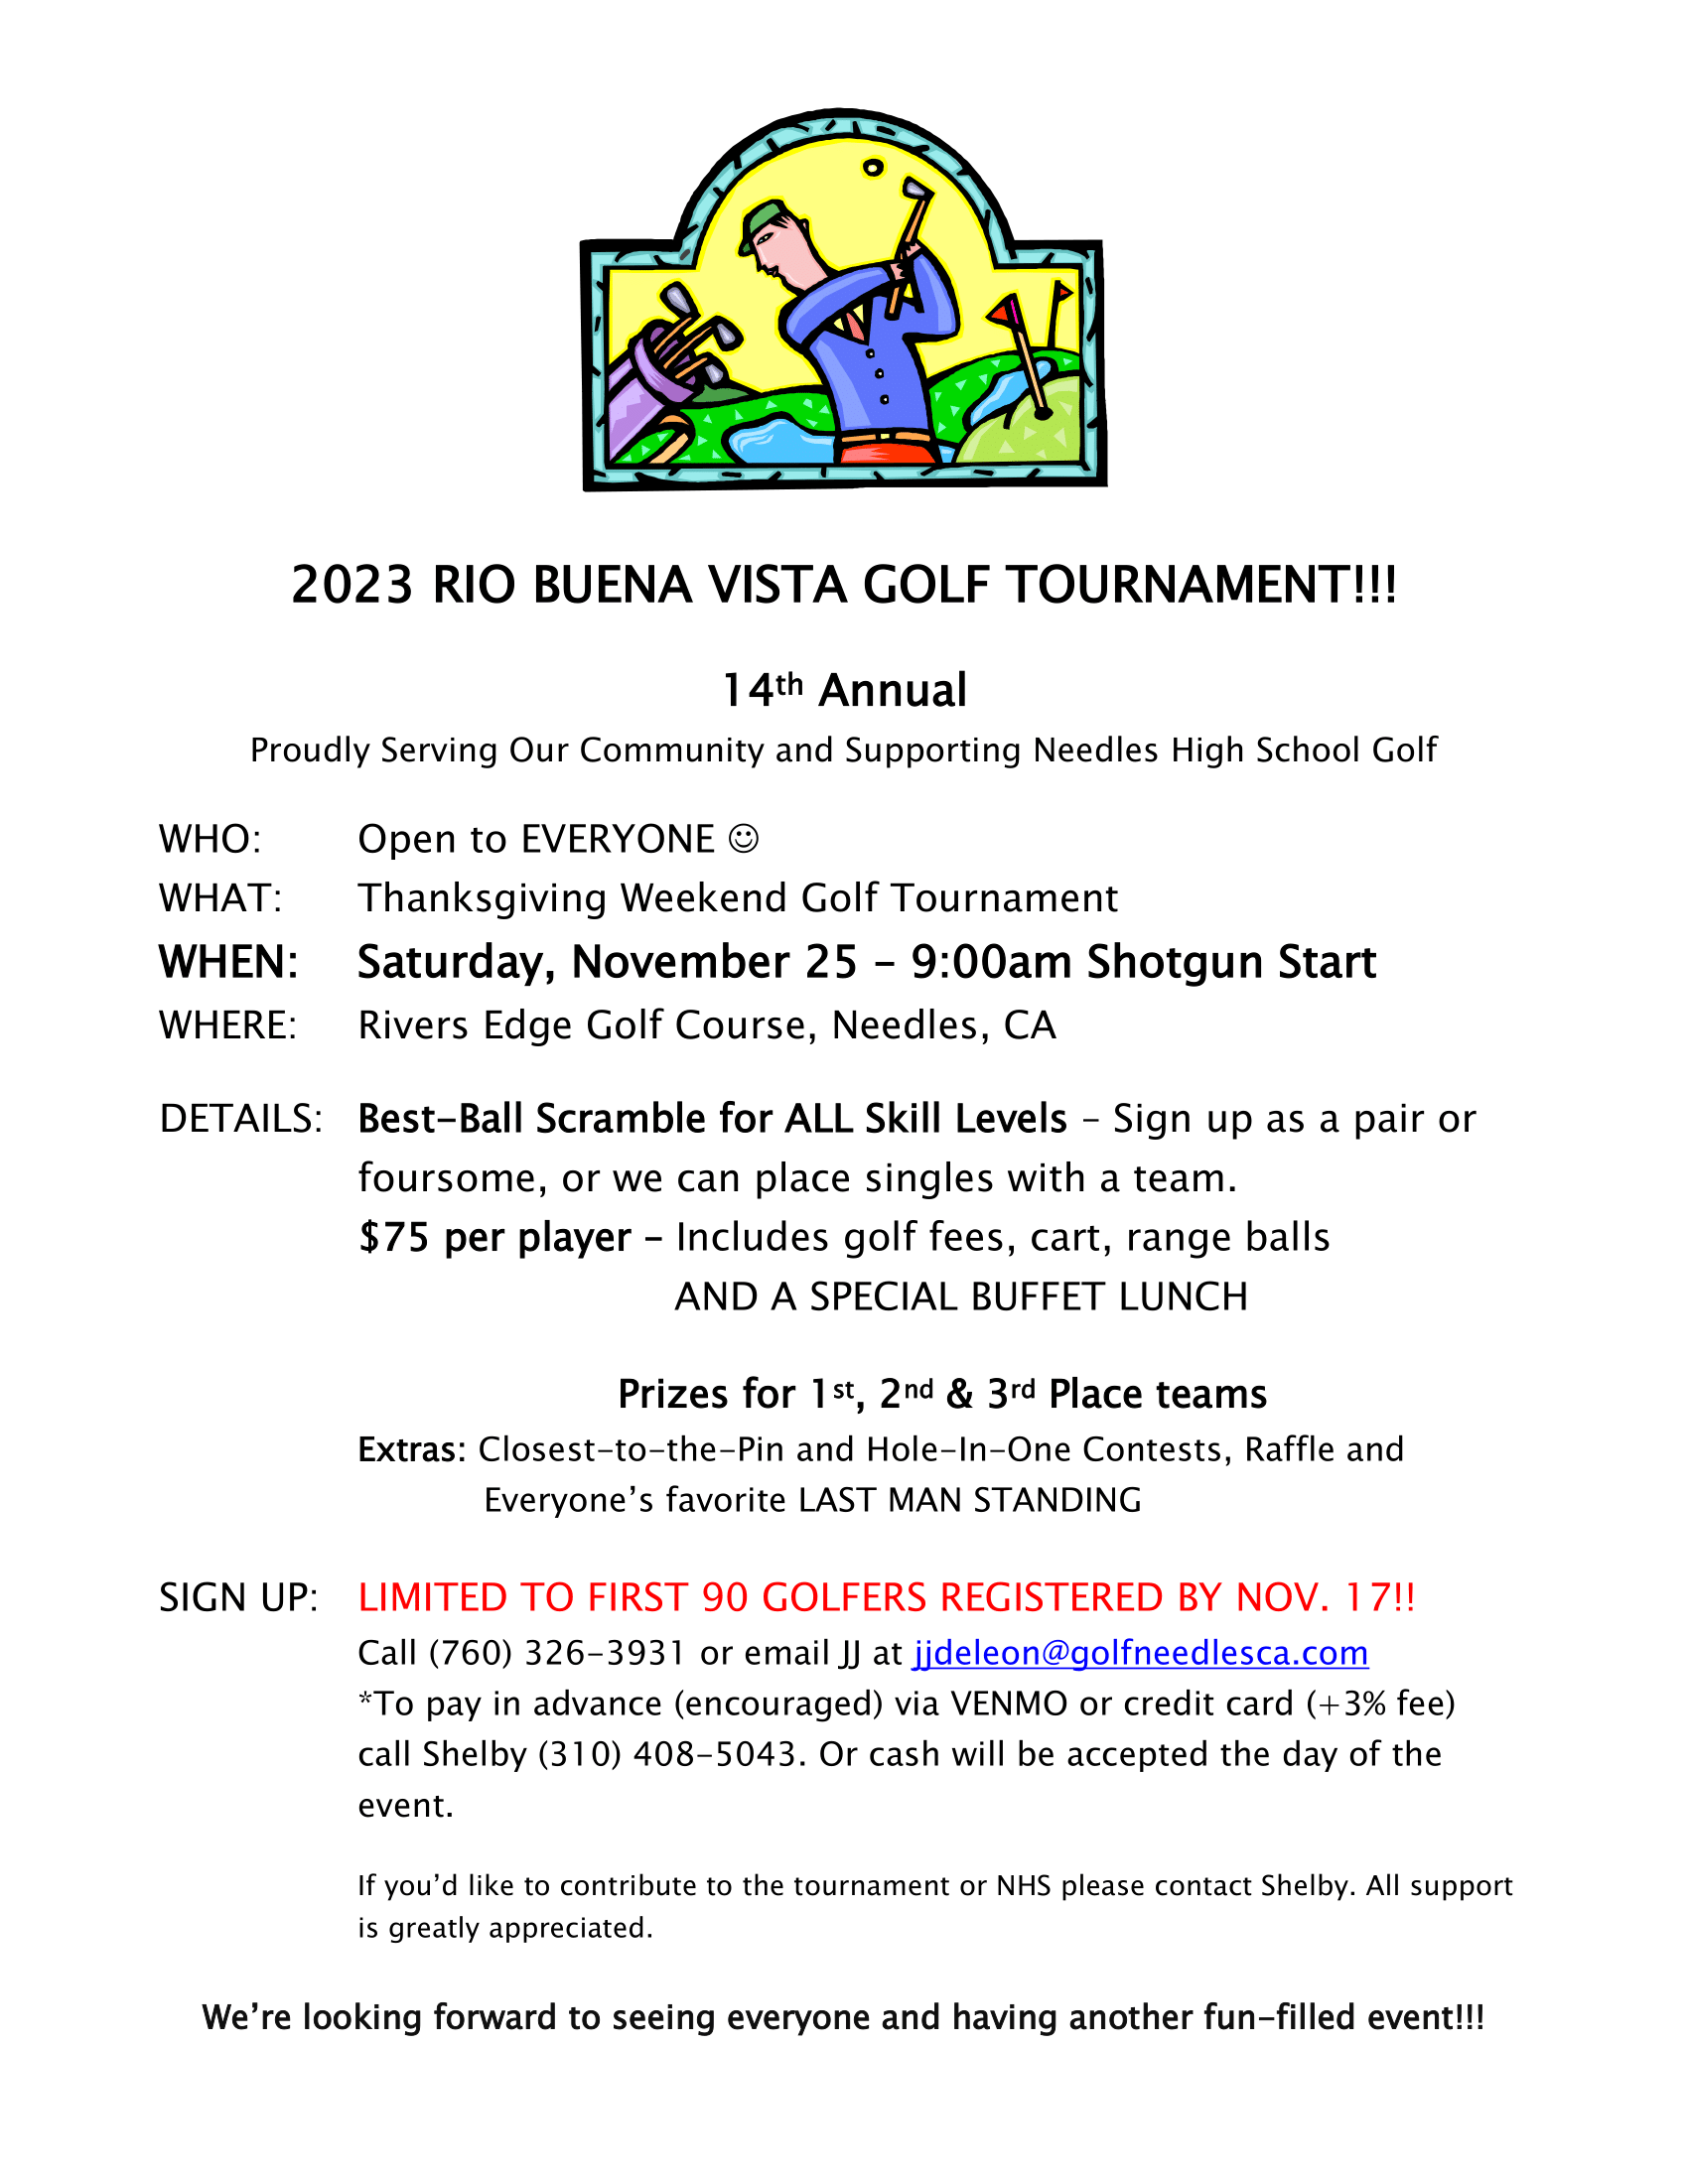 2023 RBV Golf Tournament